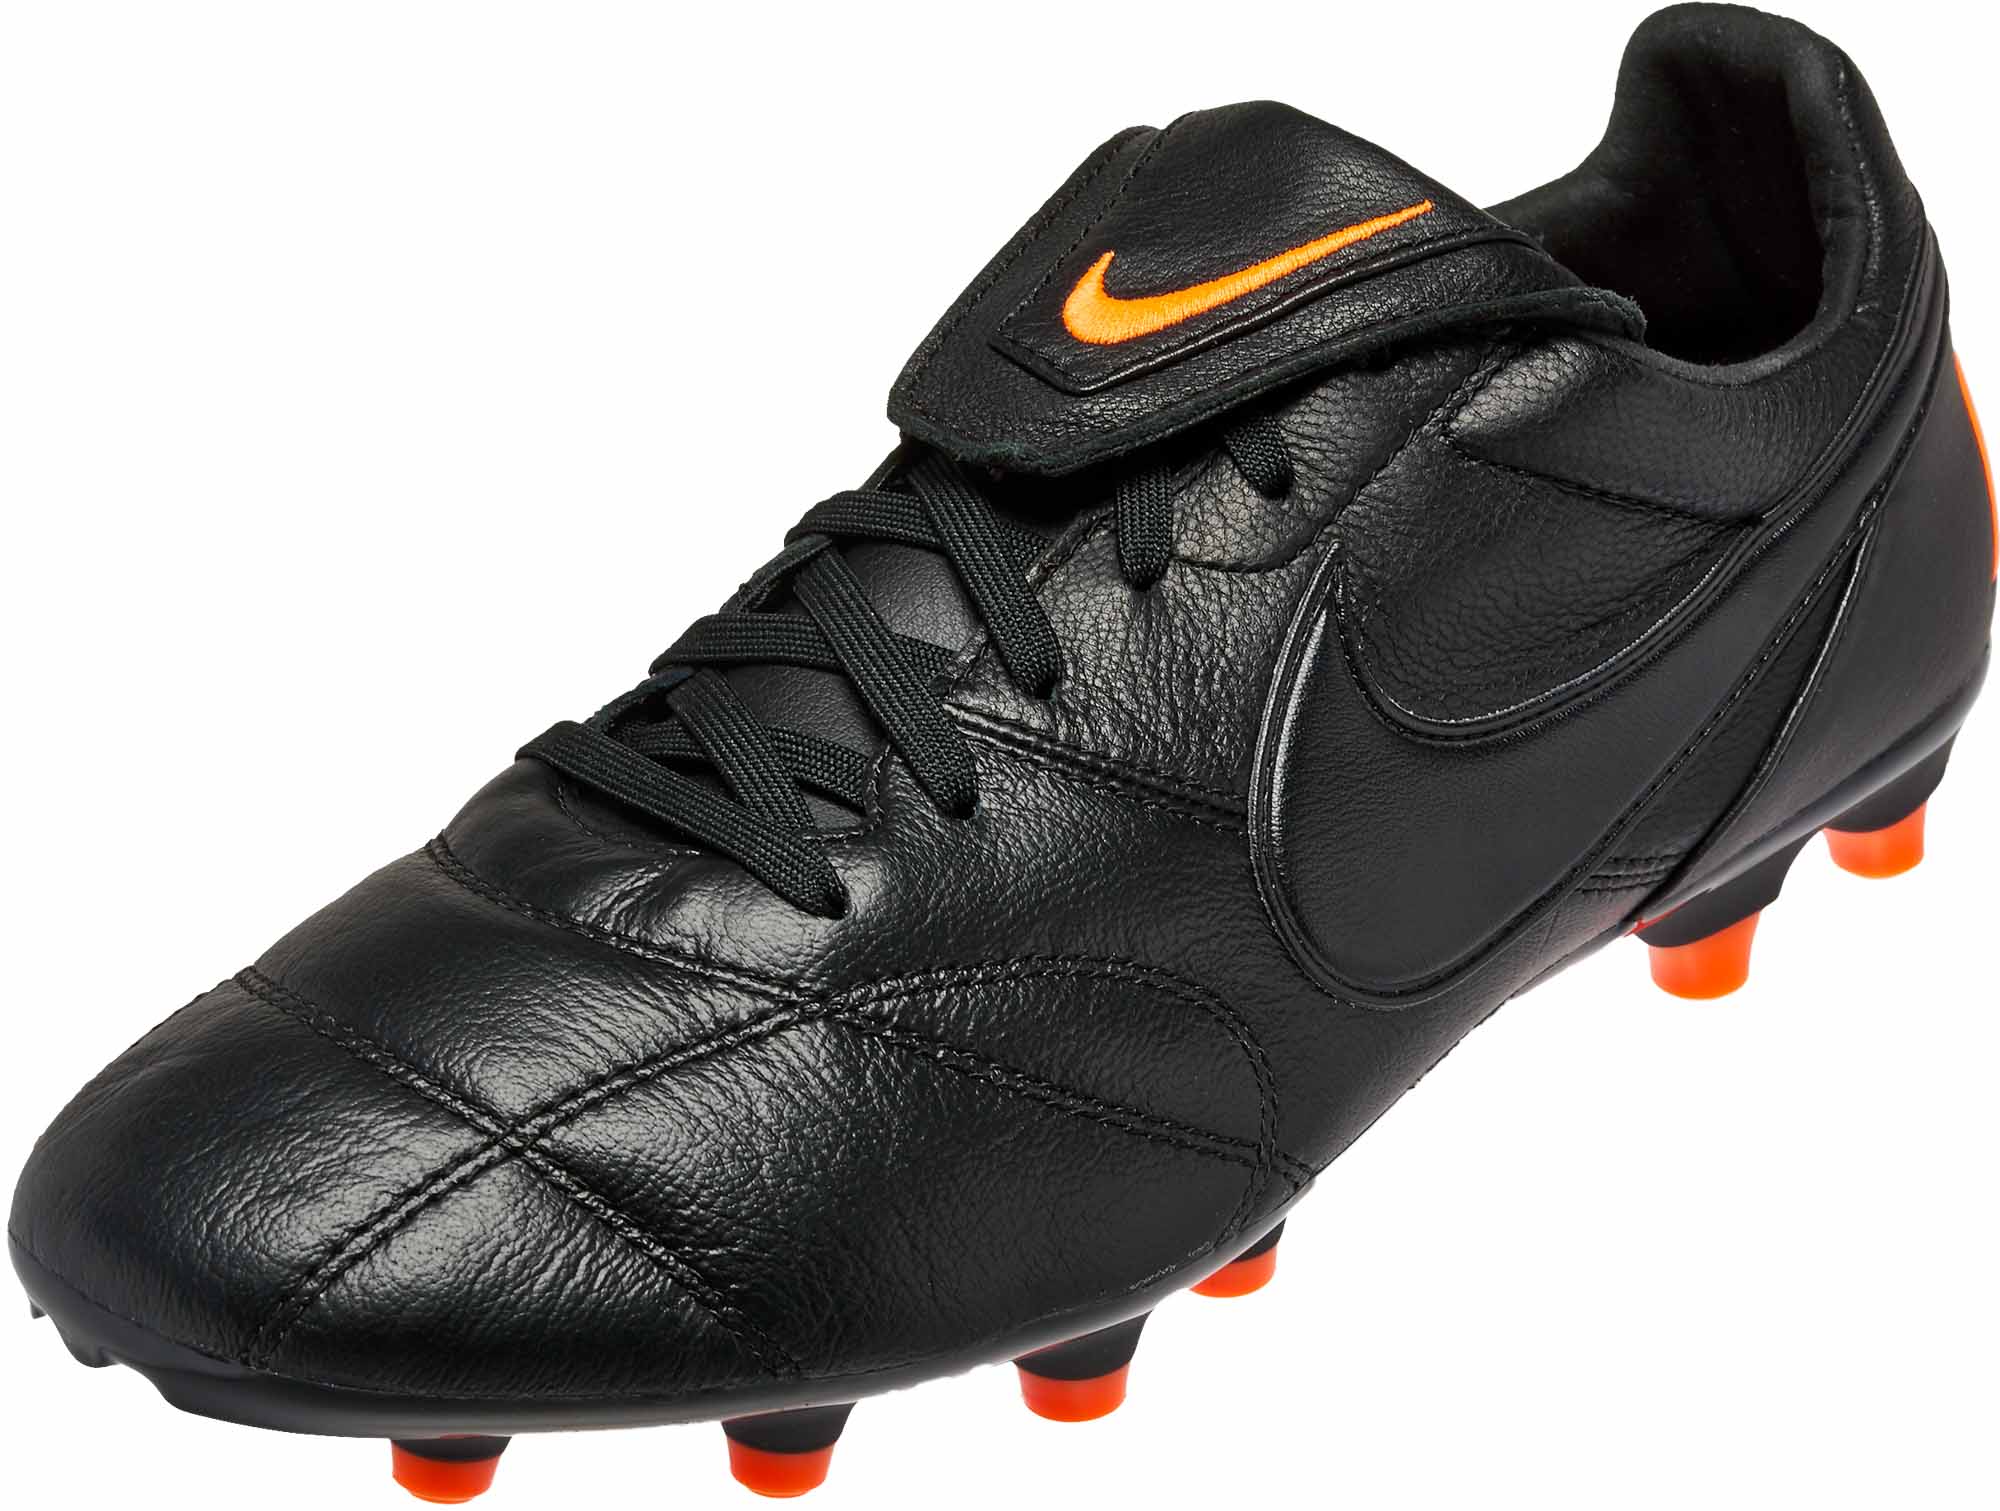 Nike Premier II - Black and Total Orange